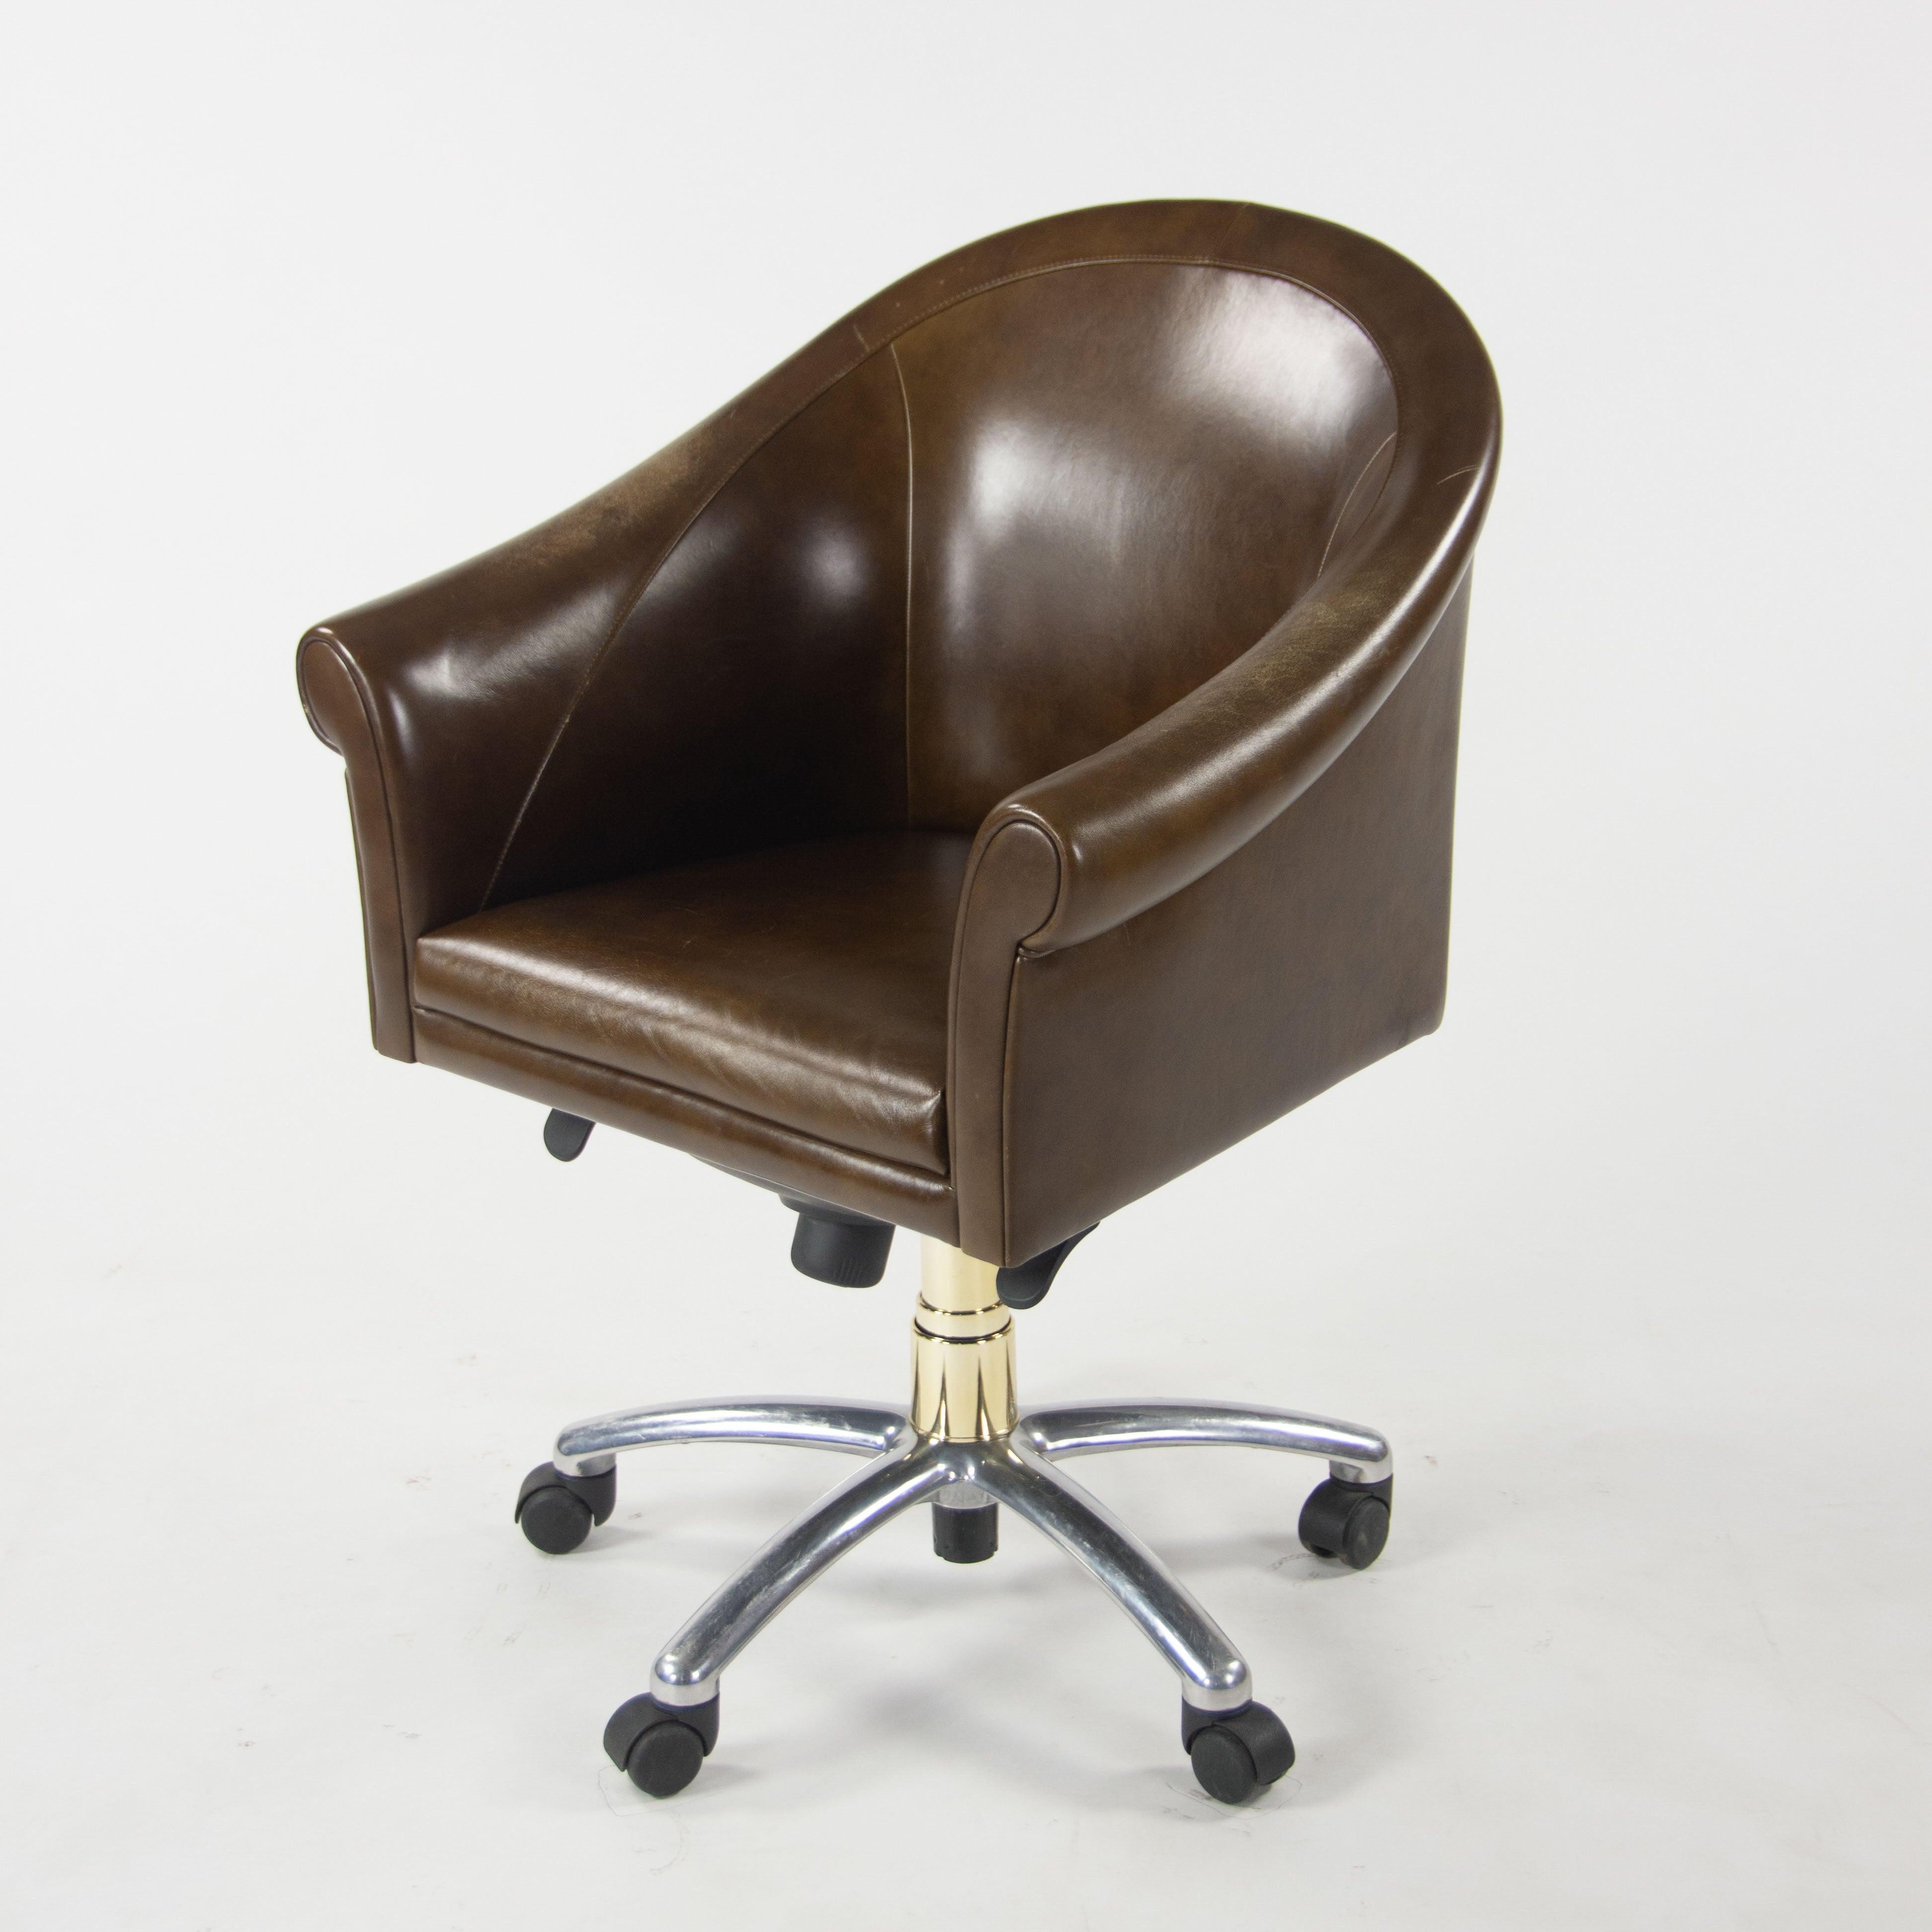 Poltrona Frau Brown Leather Luca Scacchetti Sinan Office Desk Chair For Sale 1